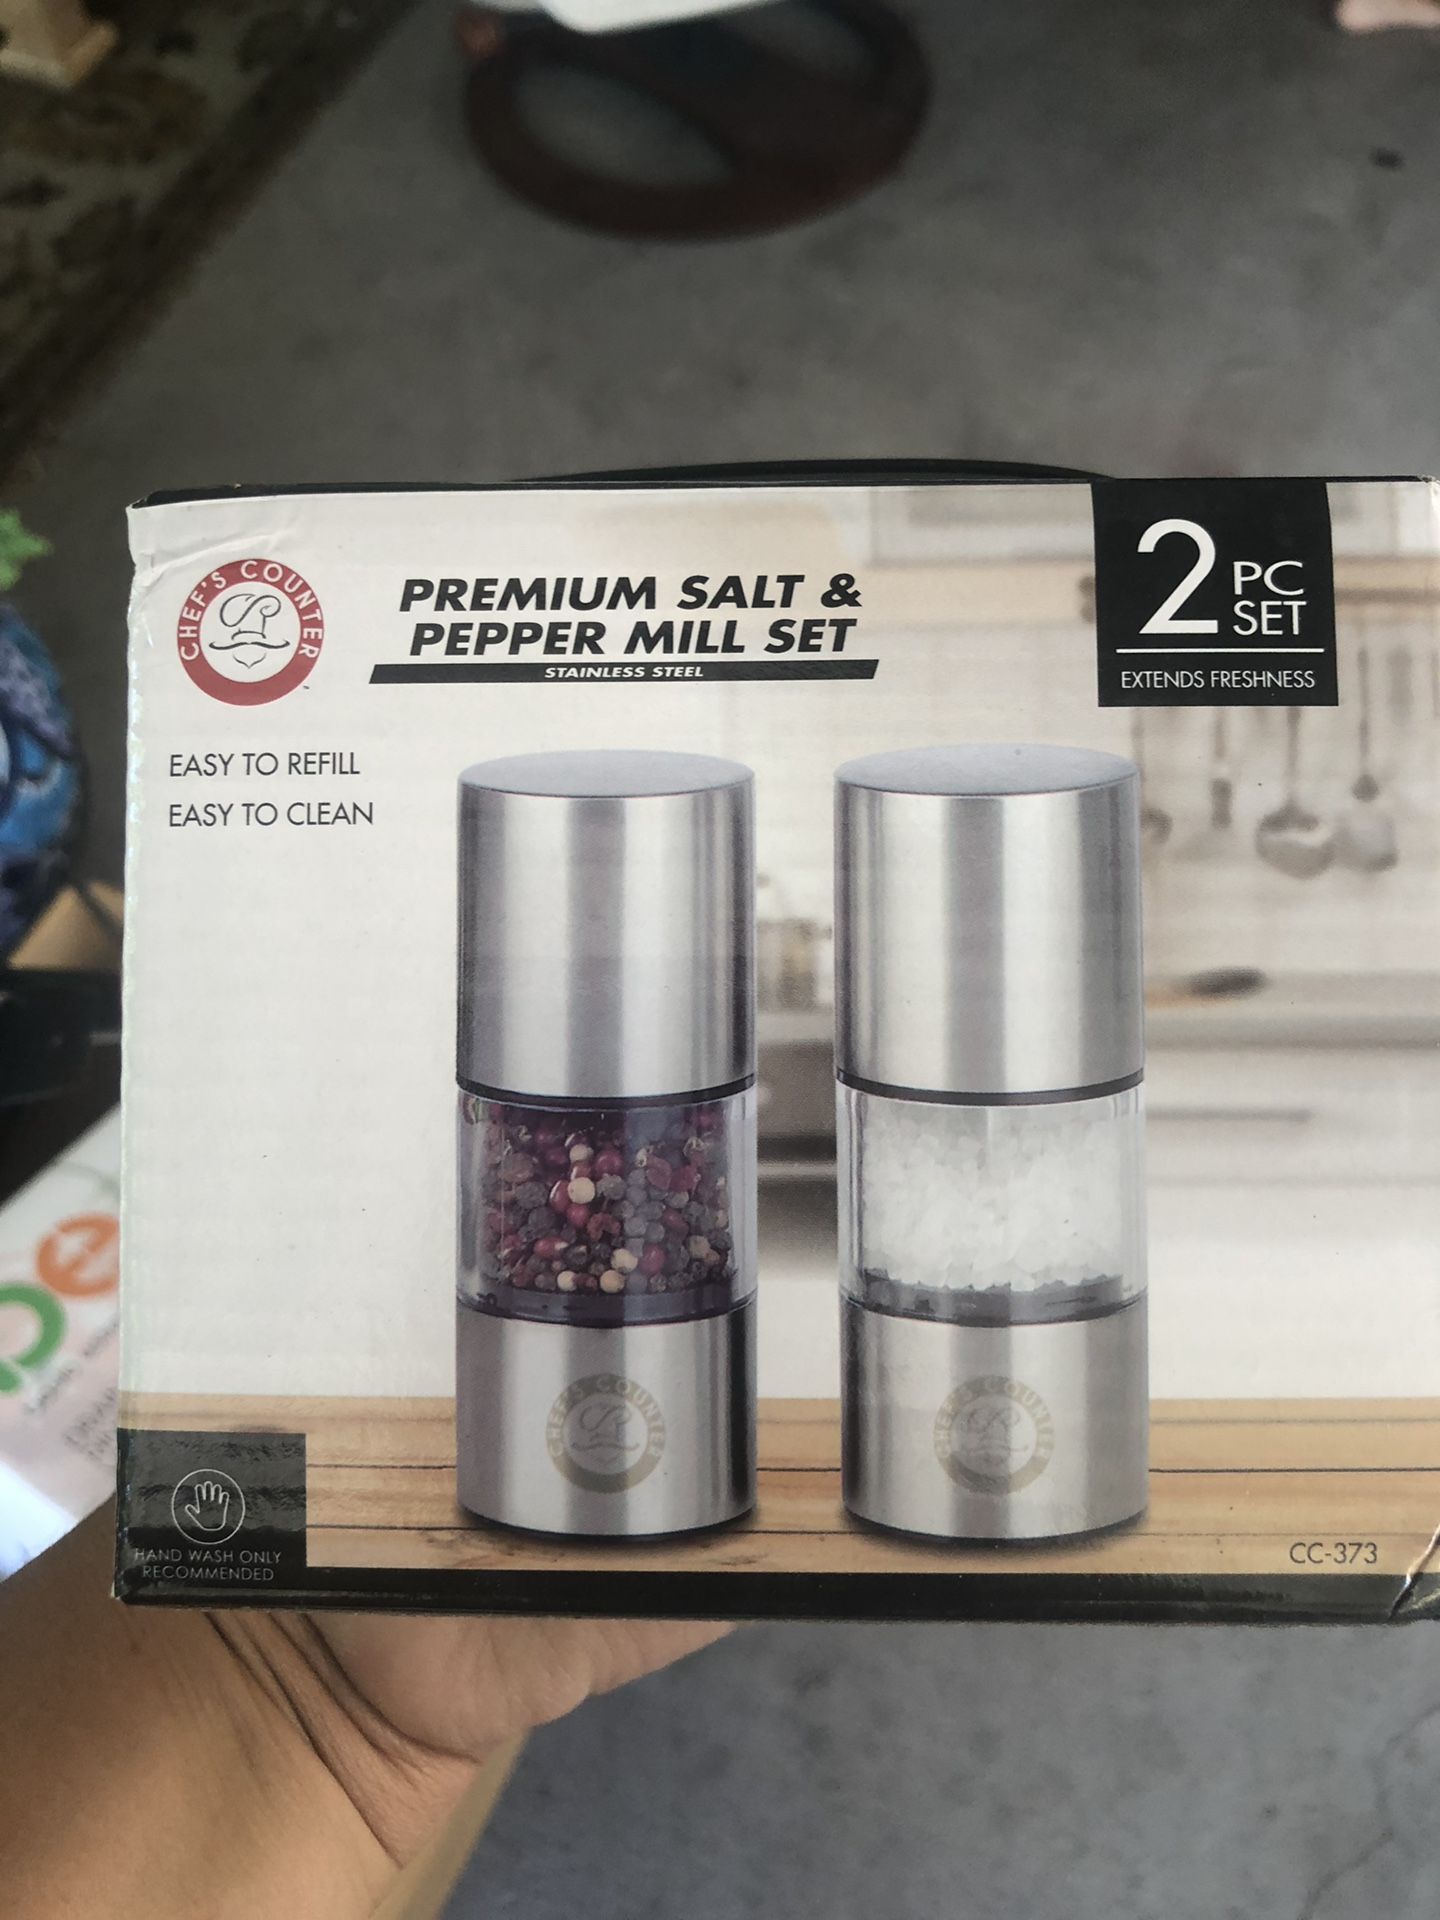 Pepper and salt mill set